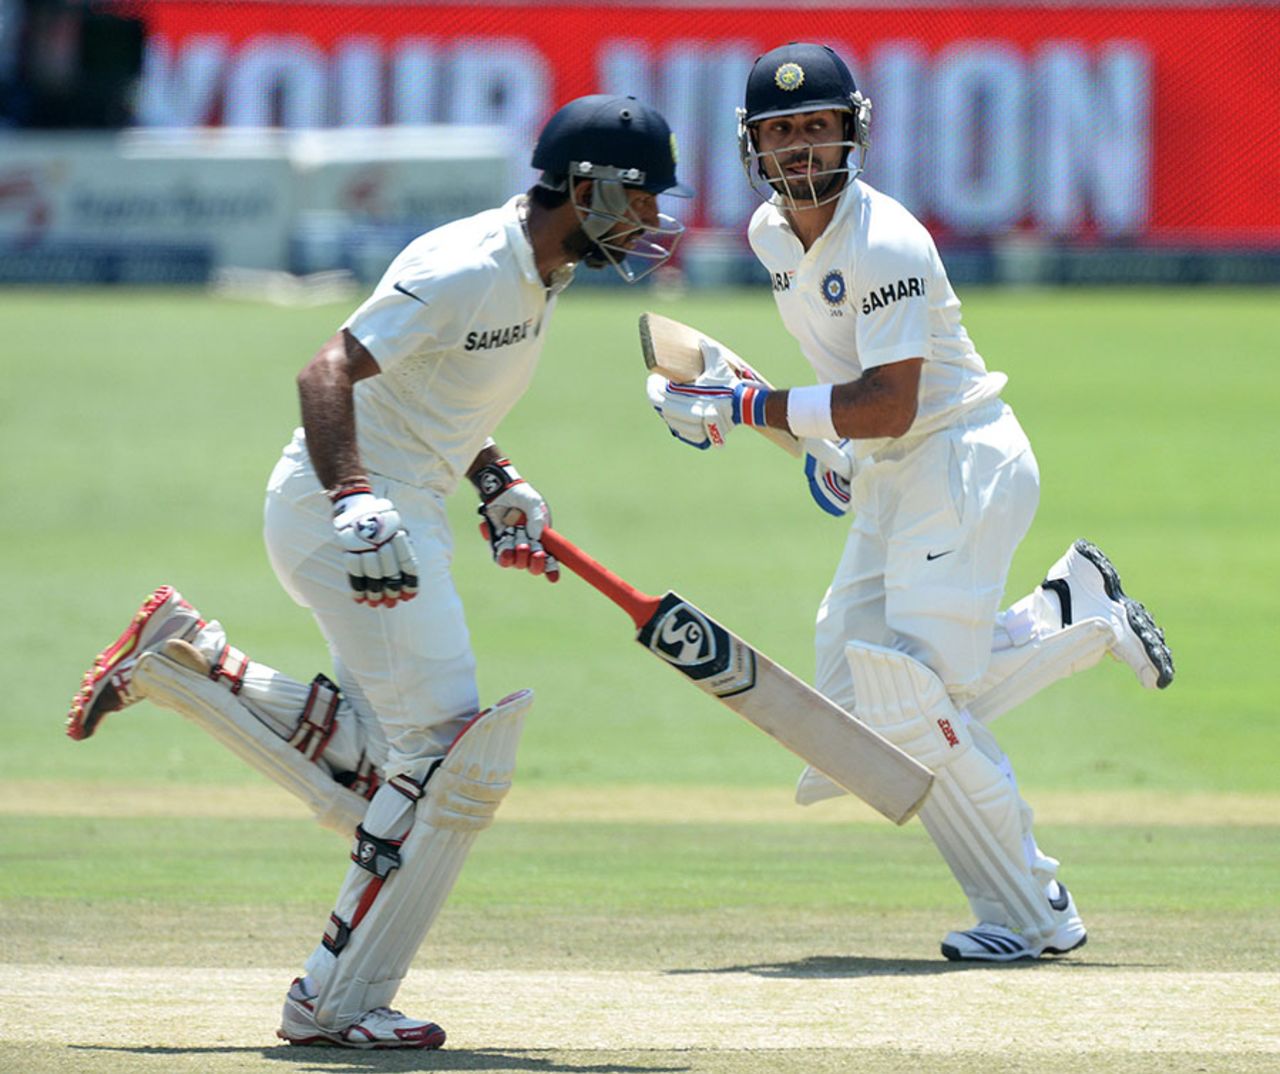 Cheteshwar Pujara and Virat Kohli added 222 for the third wicket, South Africa v India, 1st Test, Johannesburg, 4th day, December 21, 2013